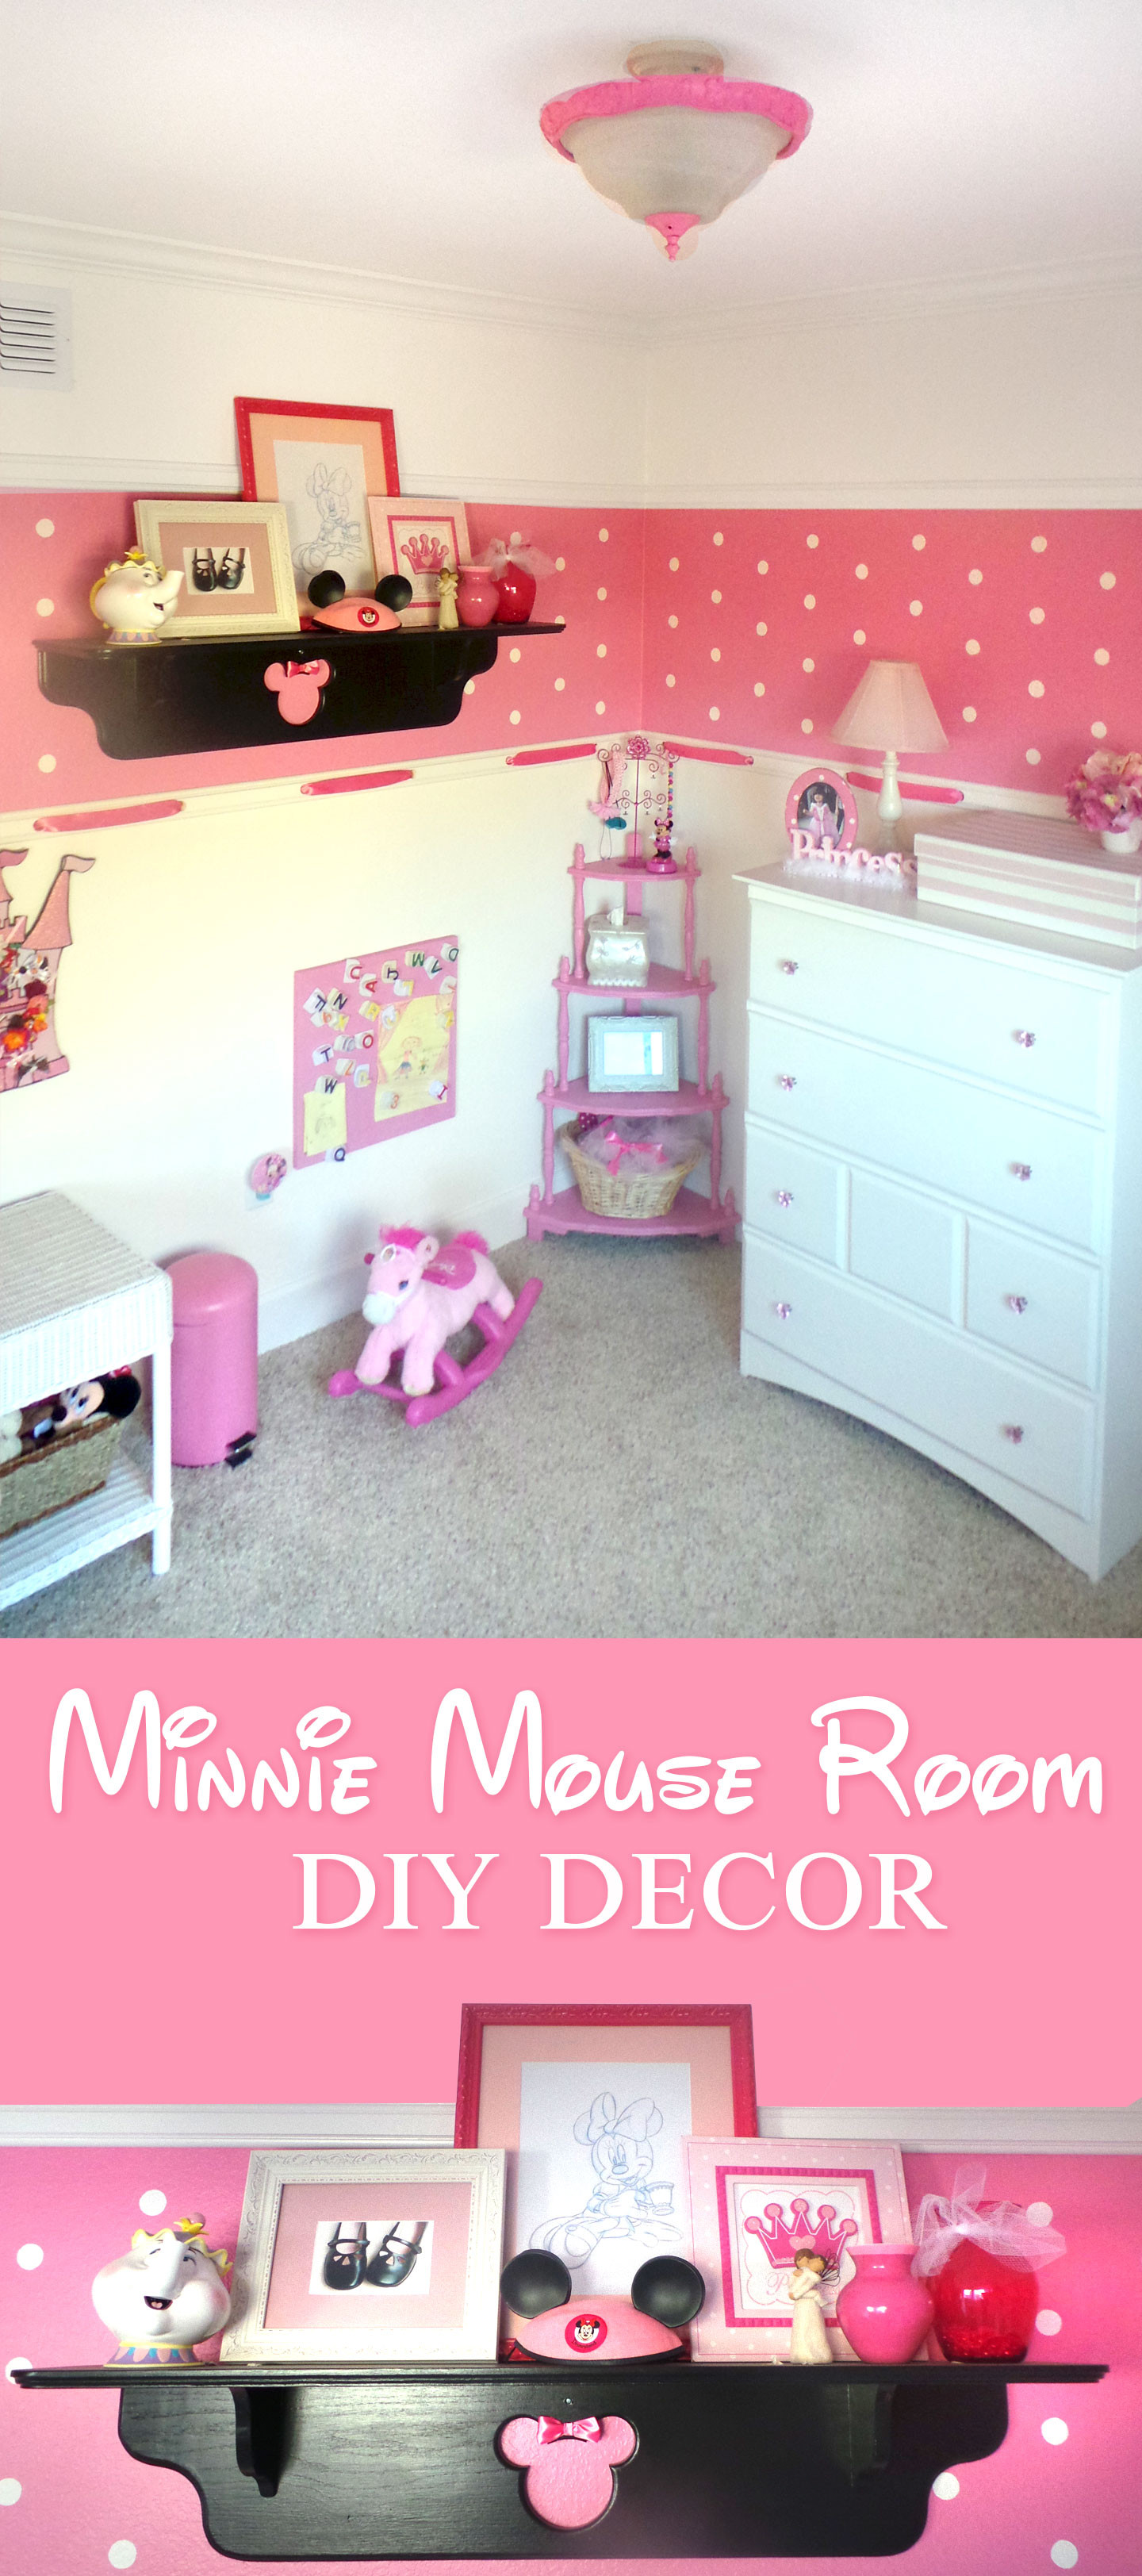 Diy Room Decor
 Minnie Mouse Room DIY Decor Highlights Along the Way